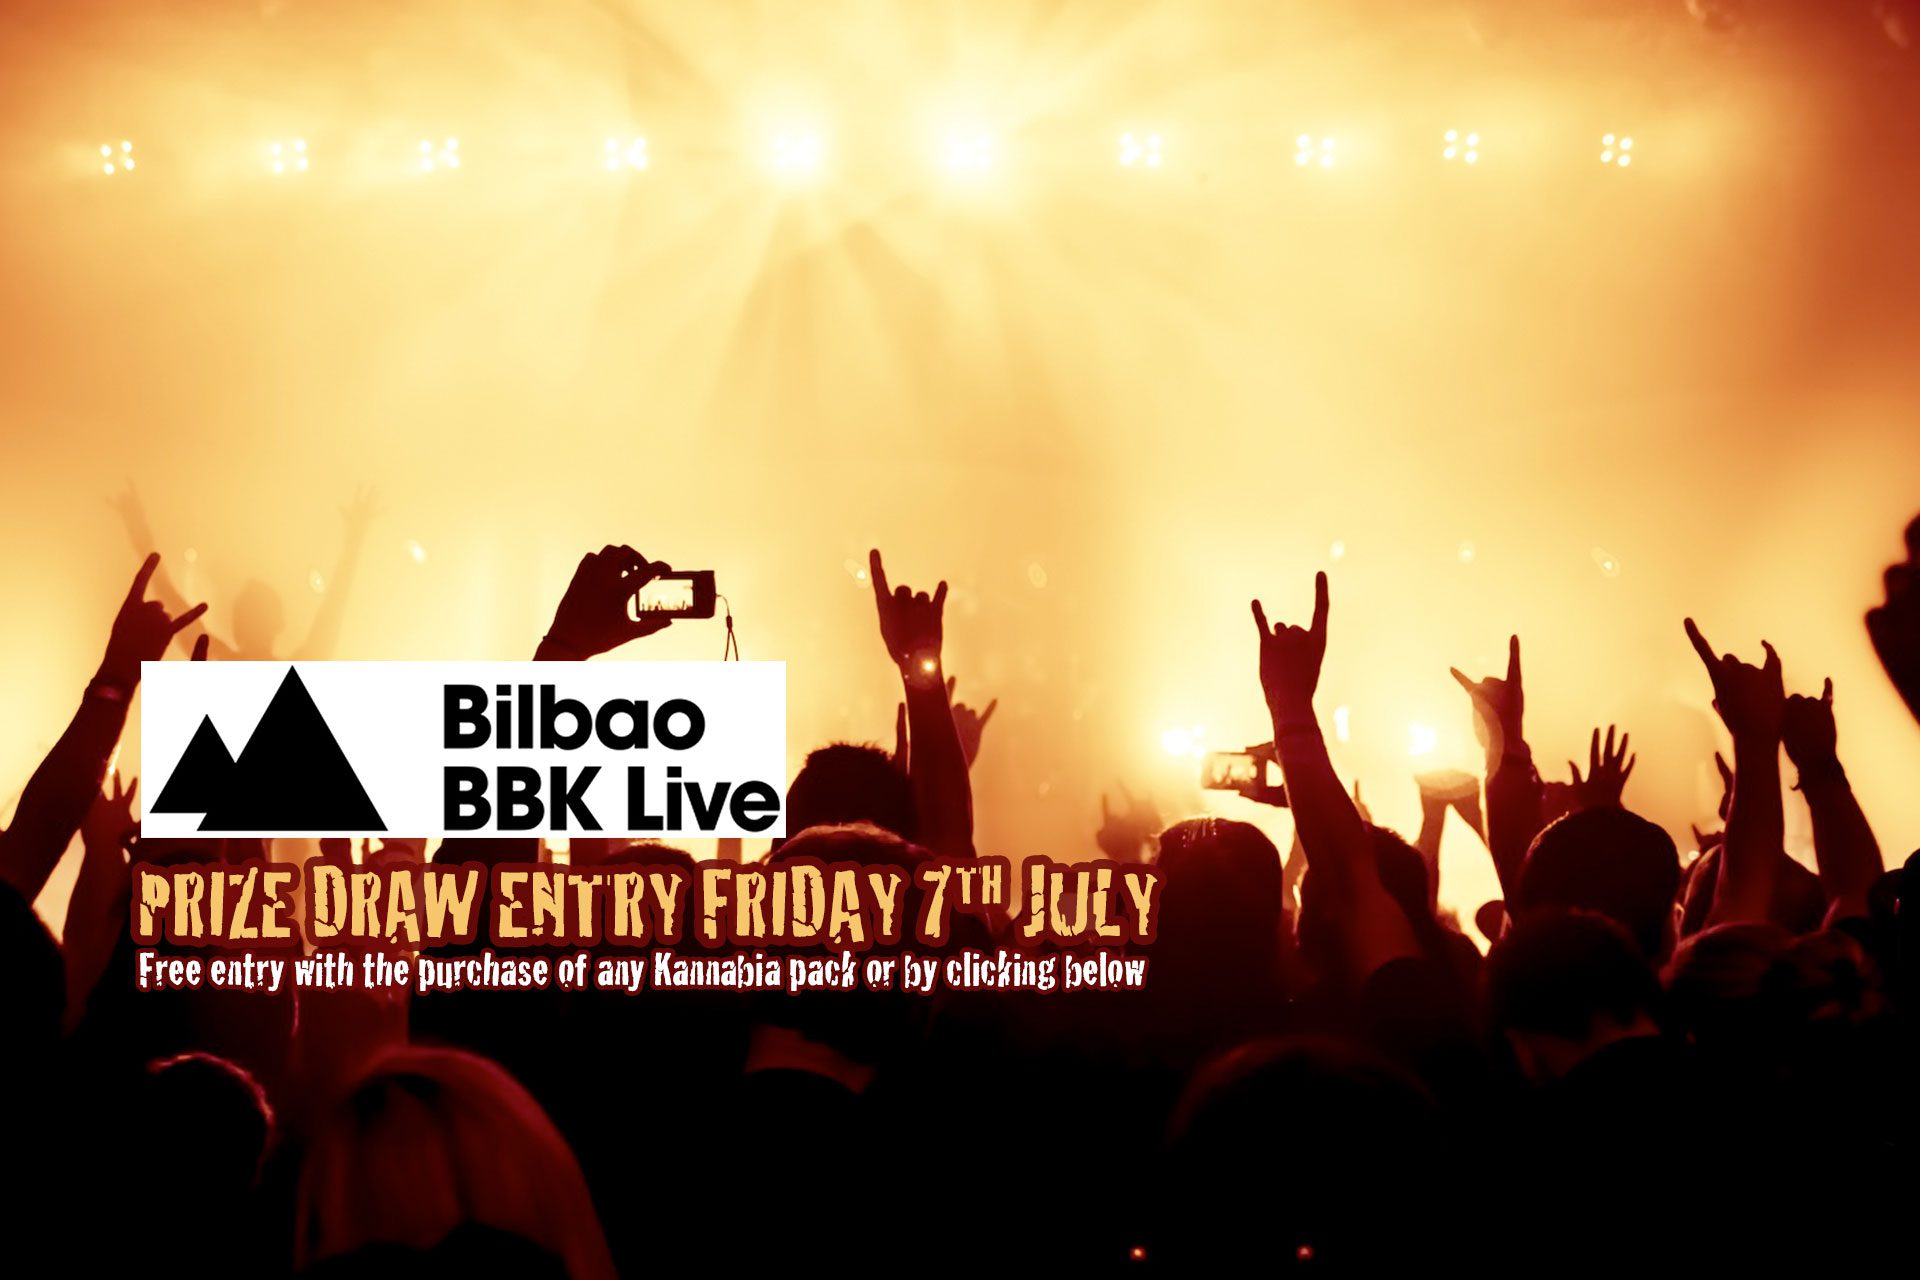 We are raffling a ticket for Bilbao BBK Live